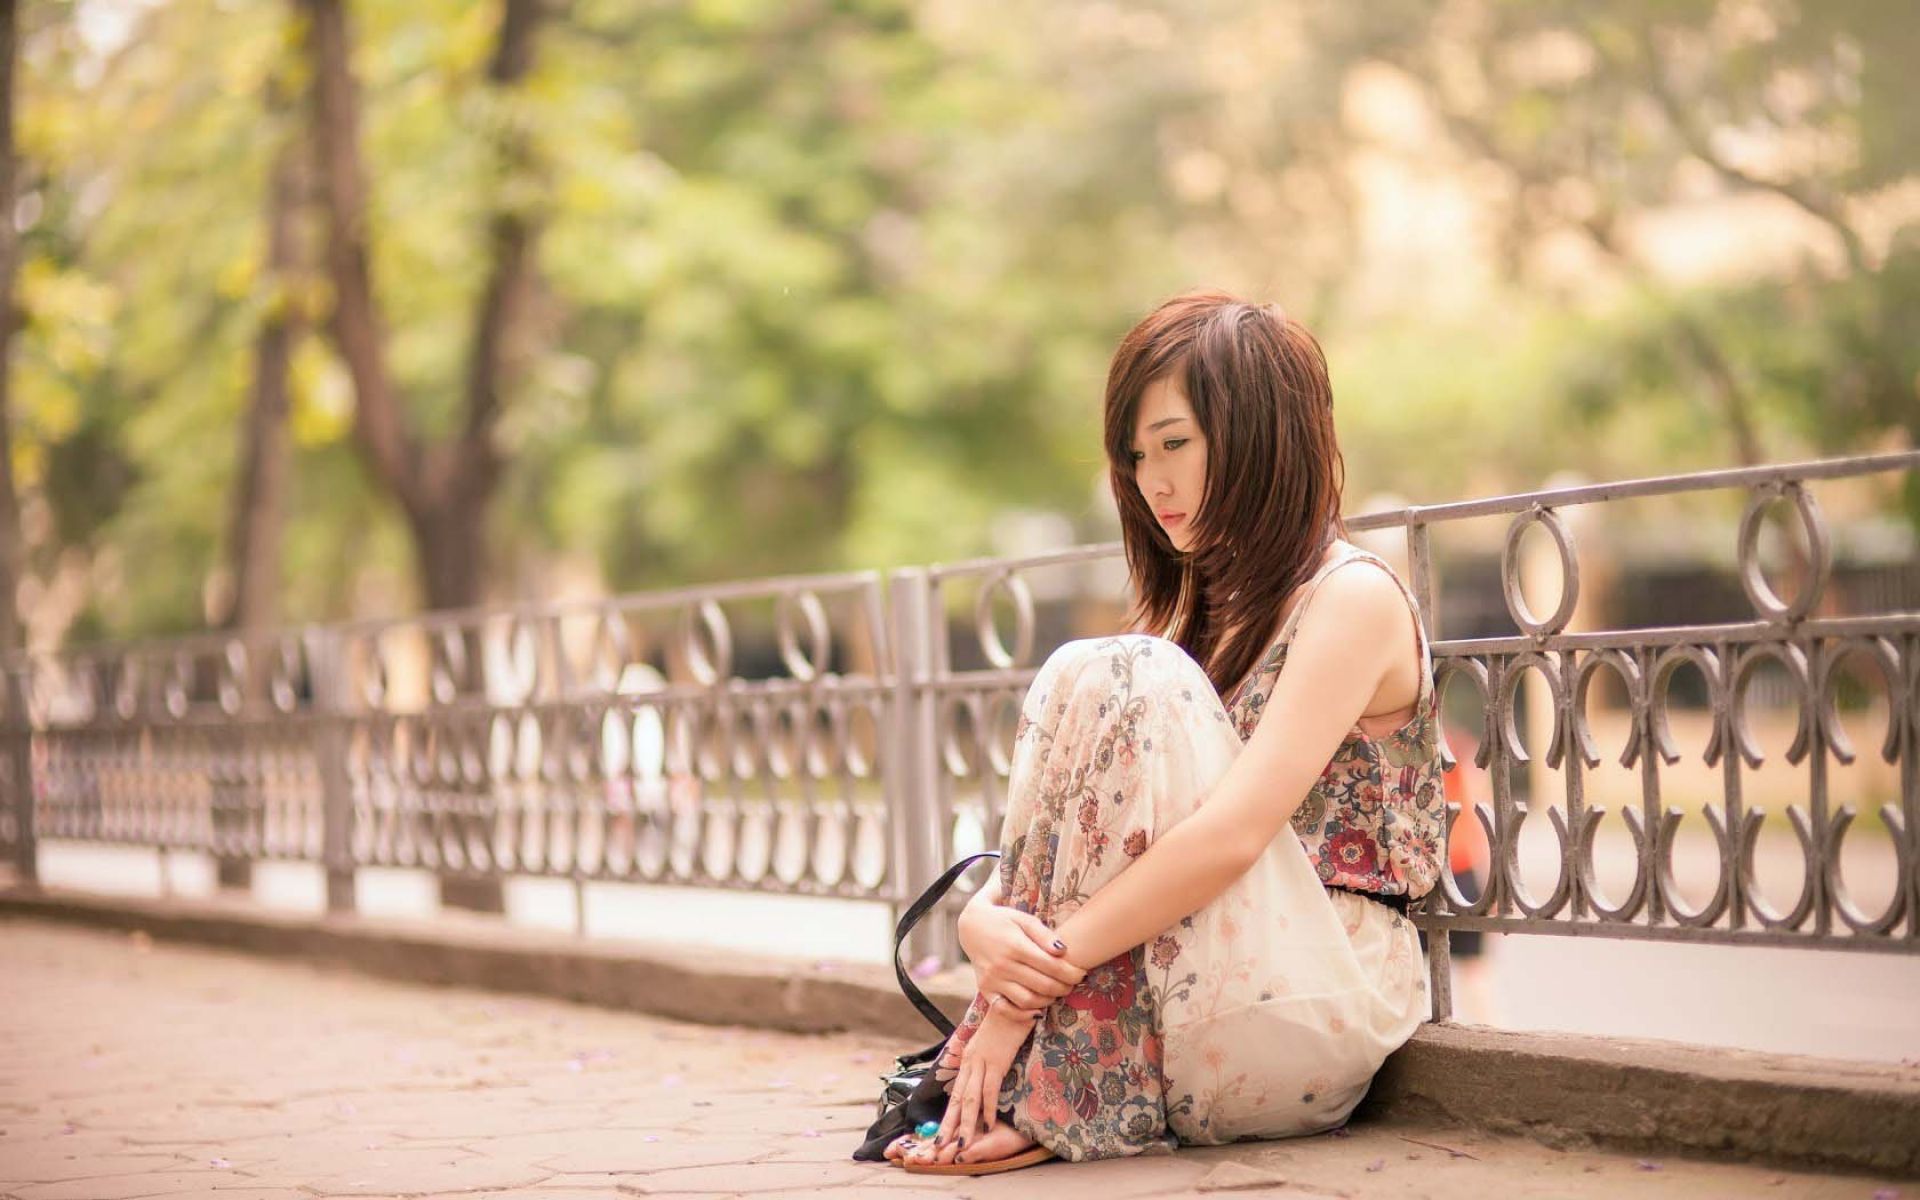 Sad Girl On The Street Hd Wallpaper - Sad Girl Image Sitting Alone - HD Wallpaper 